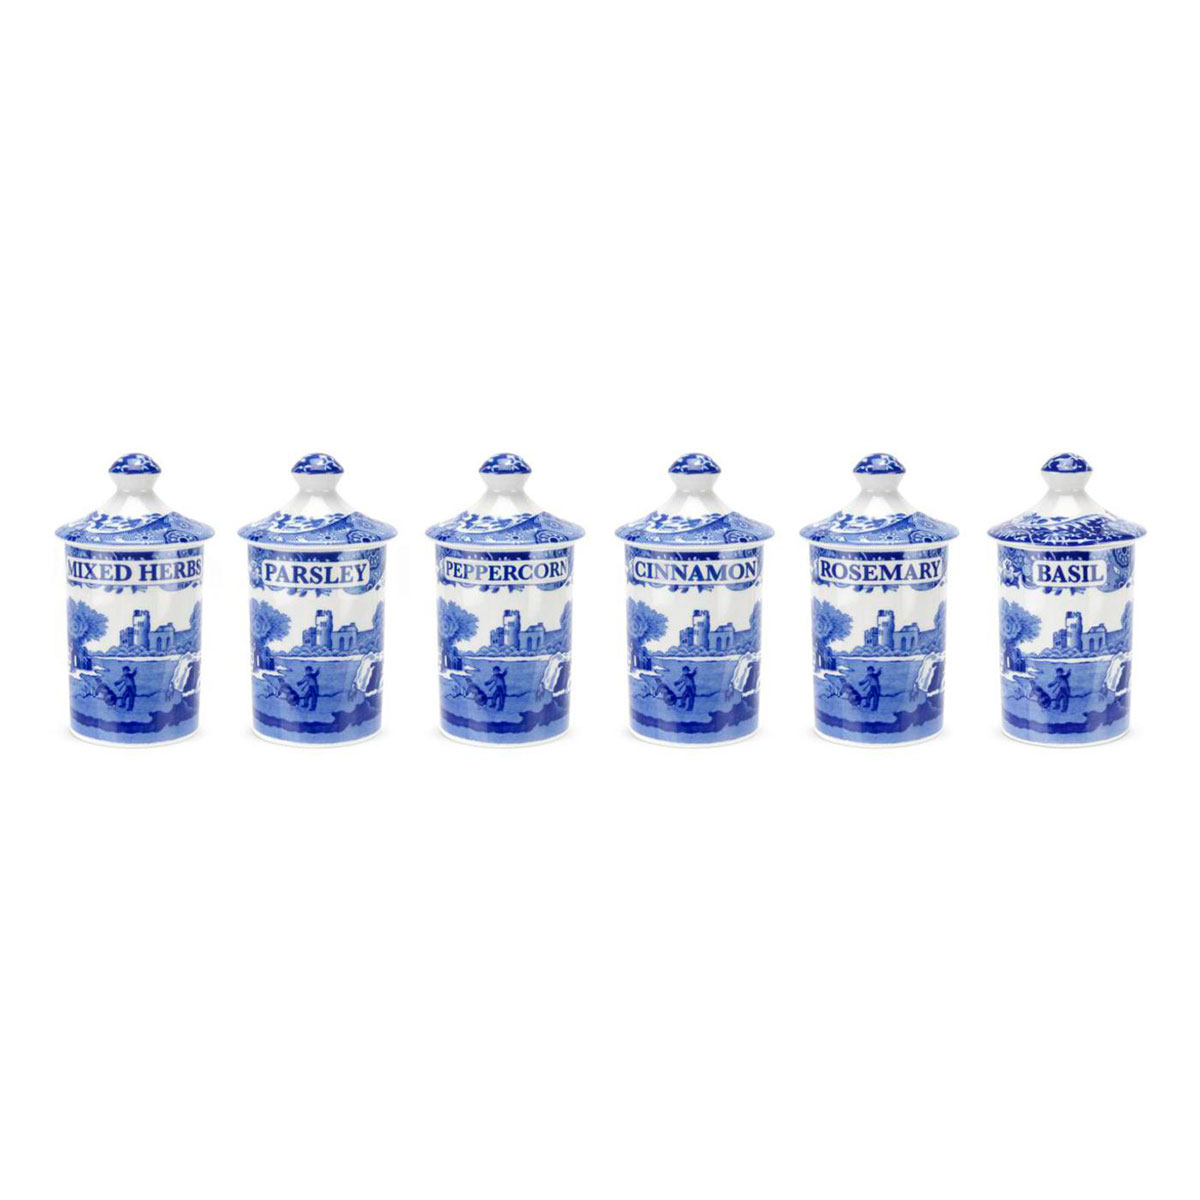 Spode Blue Italian Accessories Spice Jars Set of 6